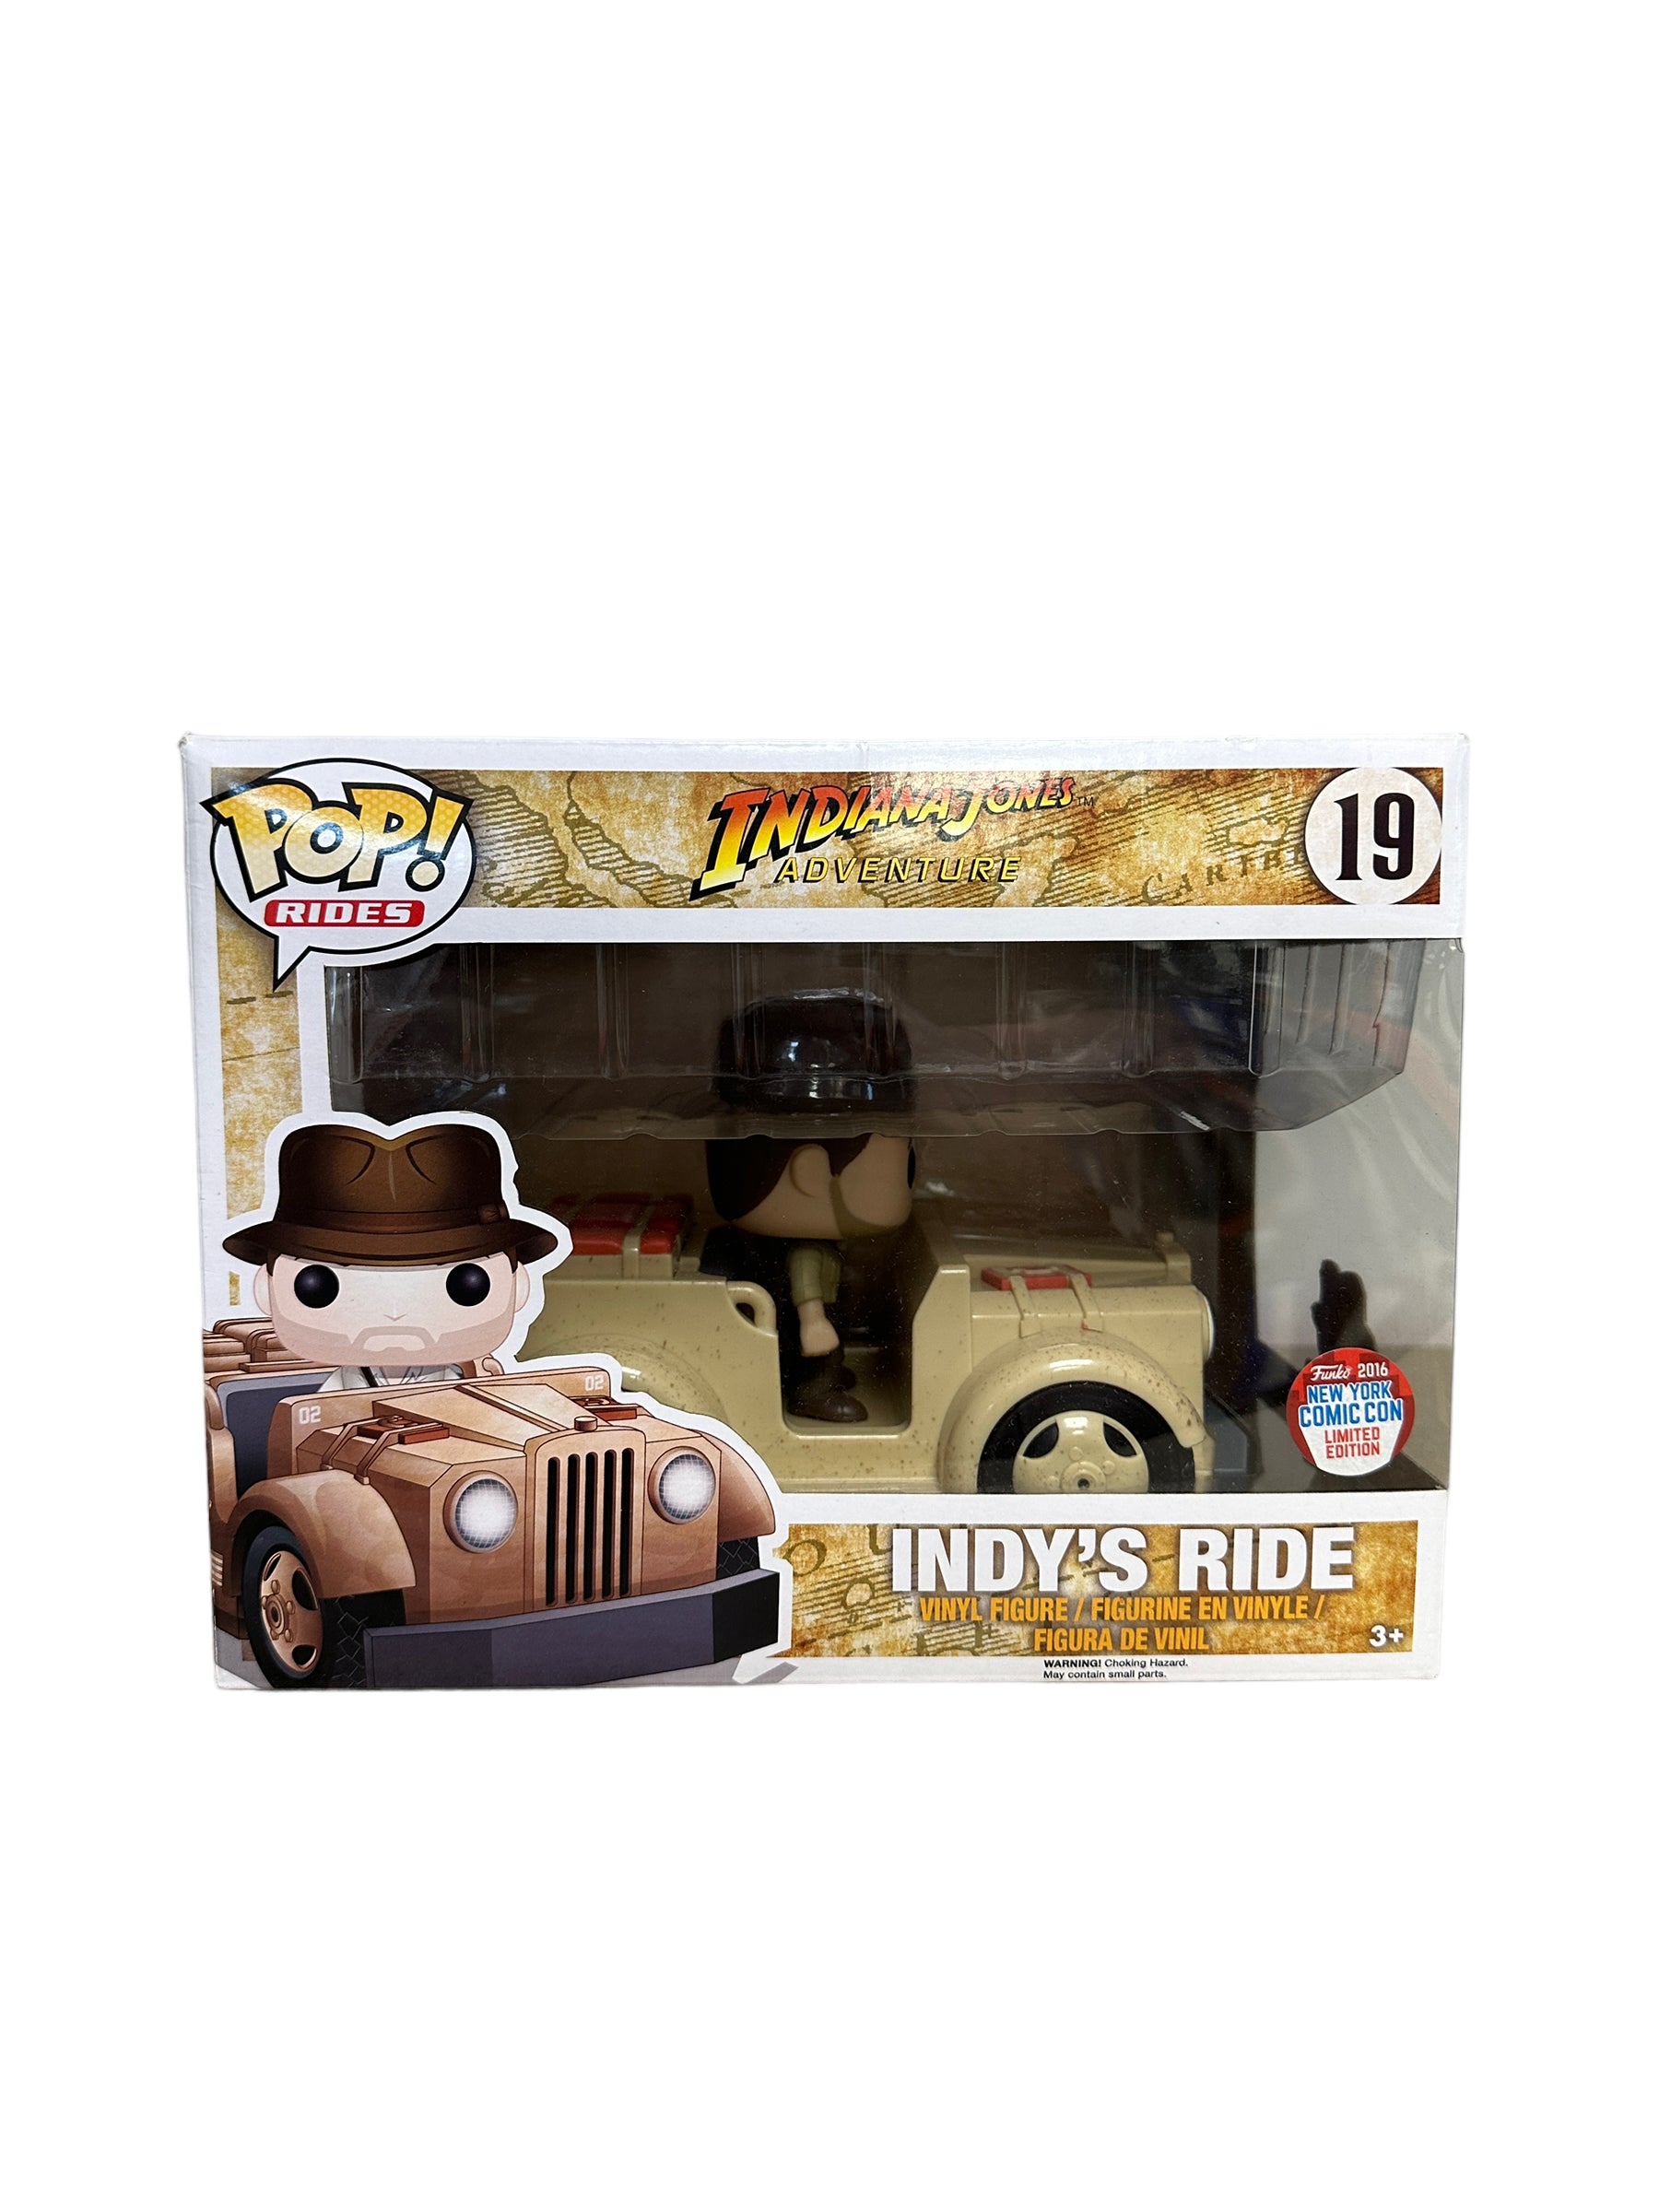 Indy's Ride #19 Funko Pop Rides! - Indiana Jones Adventure - NYCC 2016 Exclusive - Condition 7.5/10